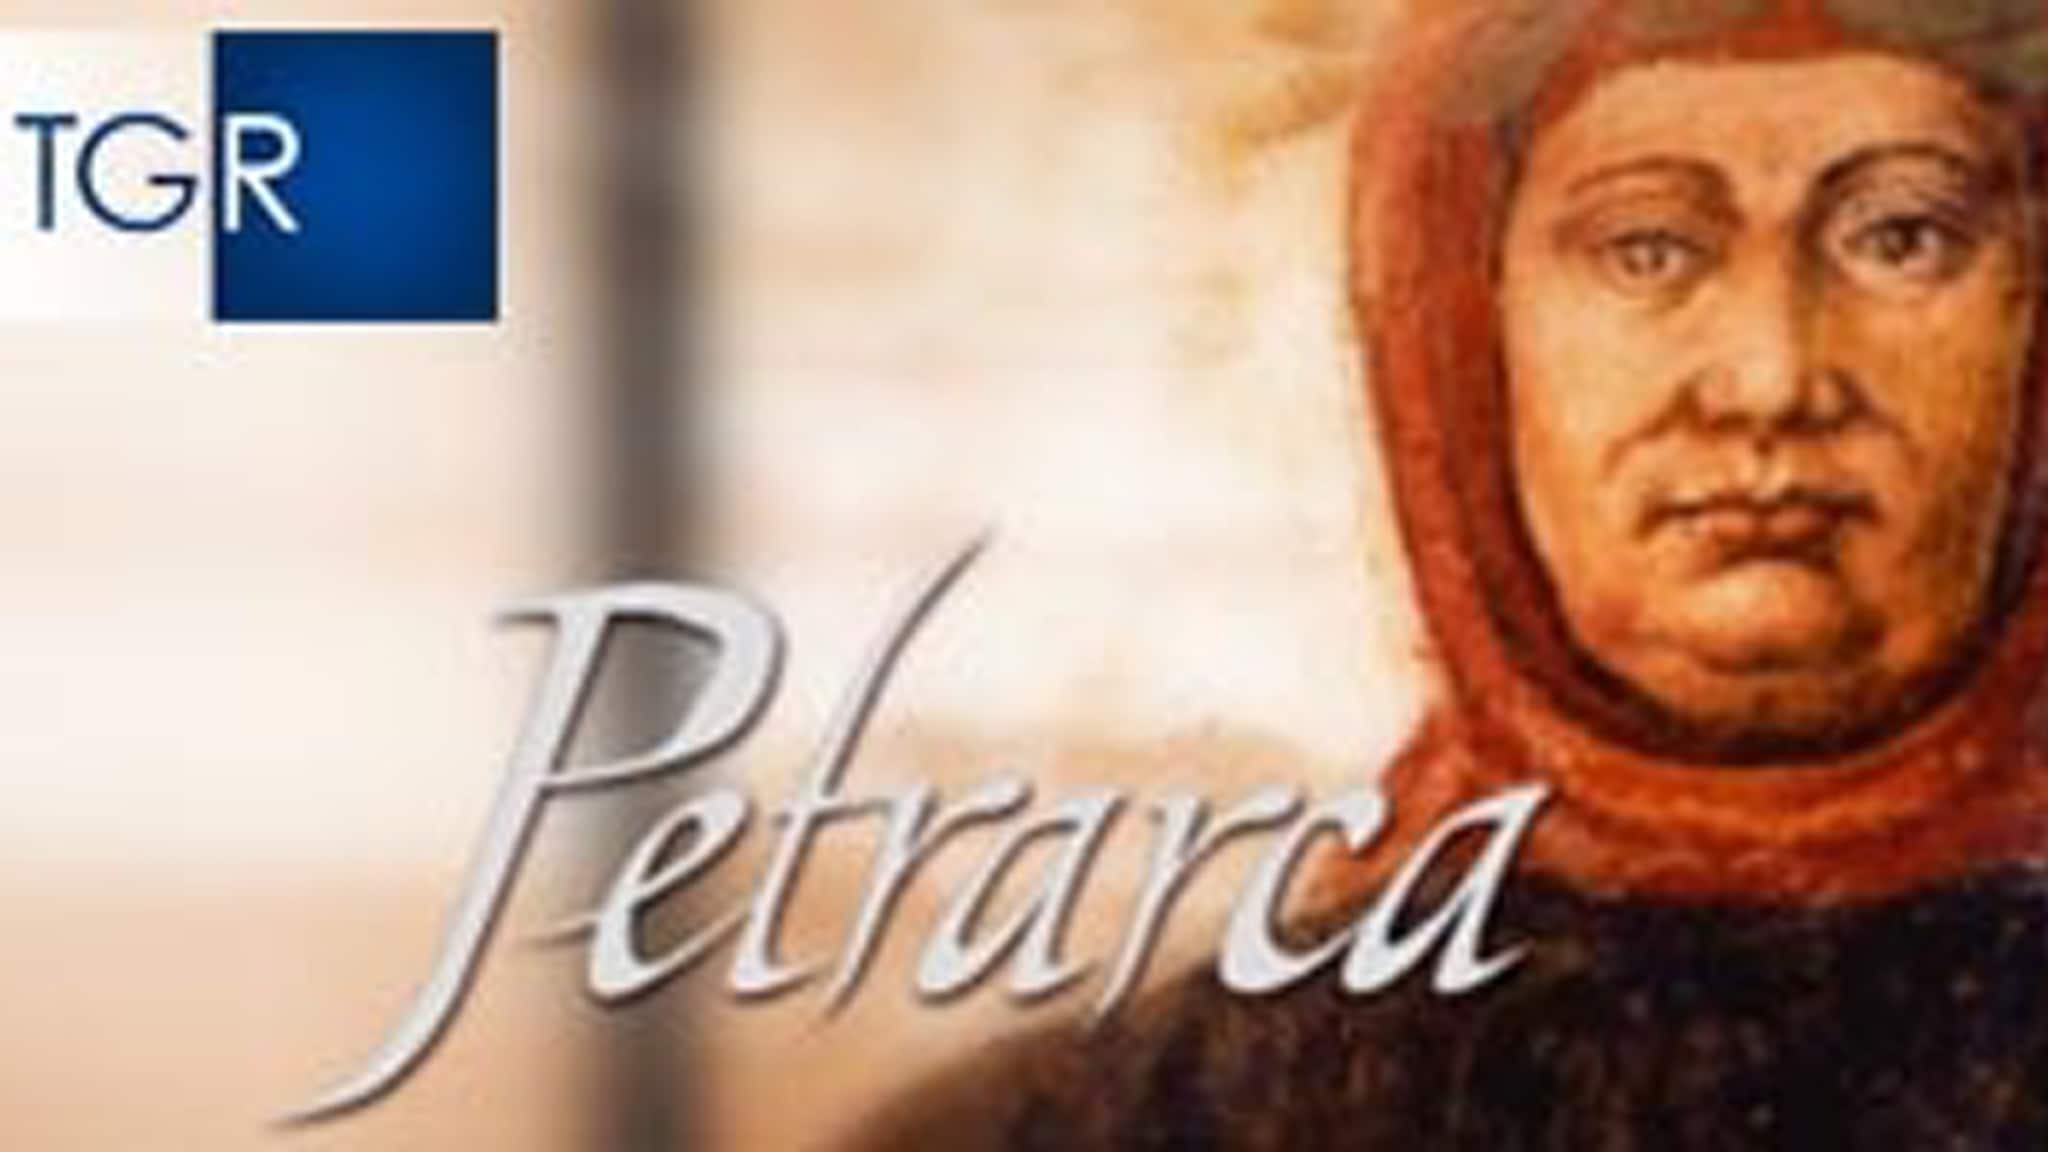 TGR Petrarca